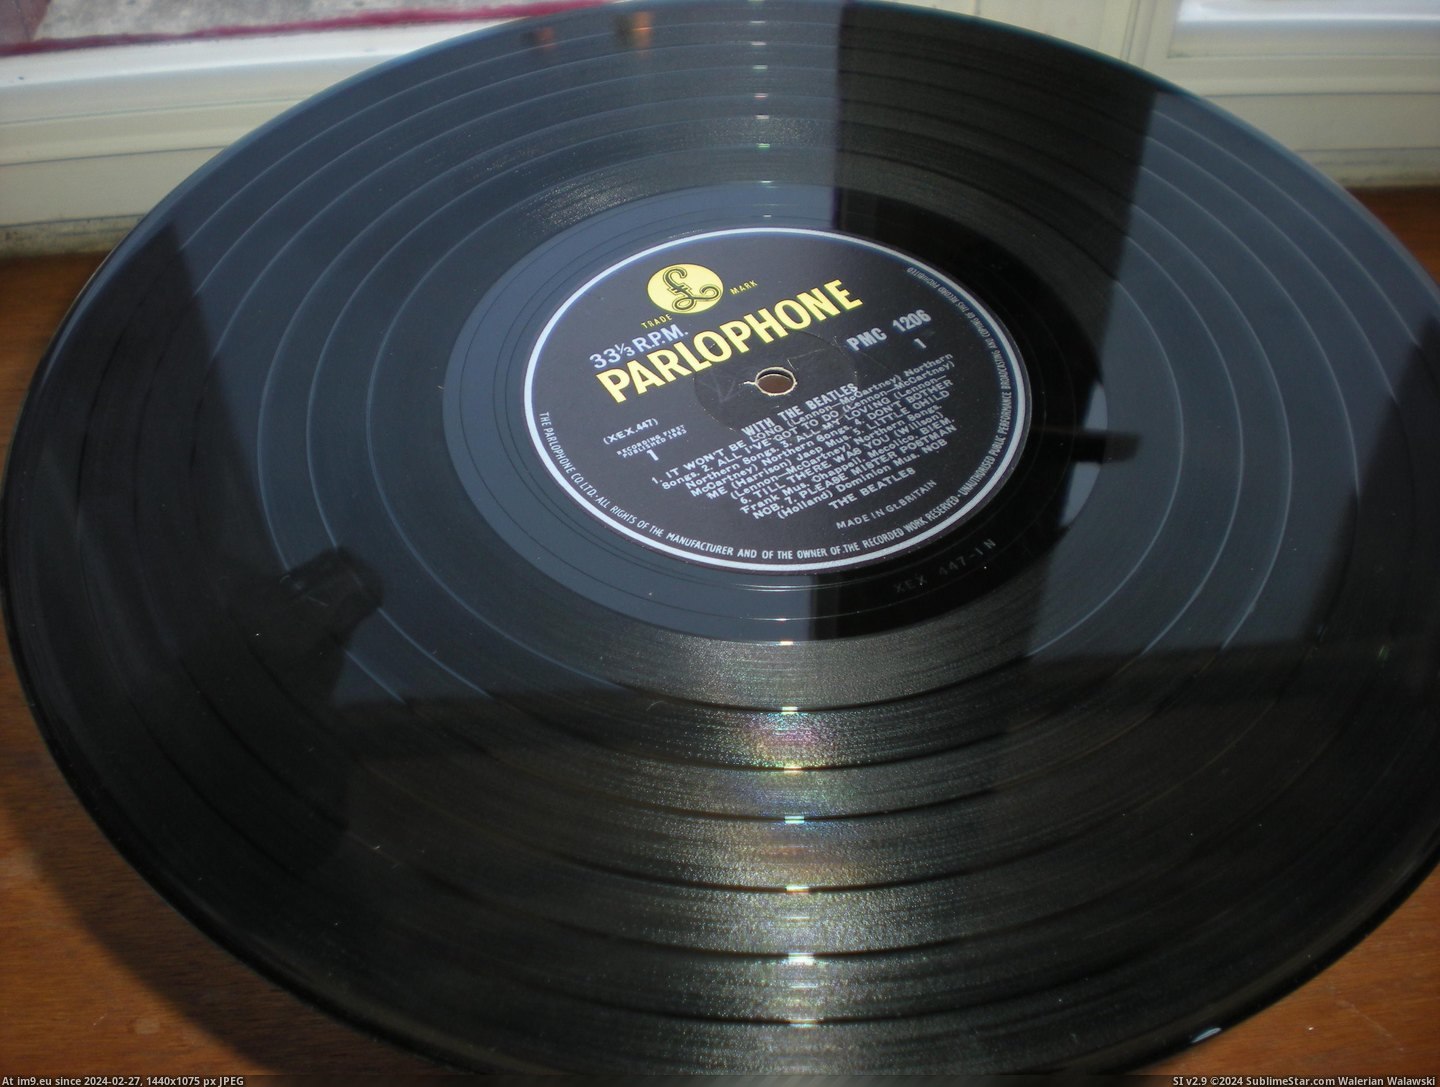 #Records #Vinyl #Record With The 22-8 2 Pic. (Bild von album new 1))